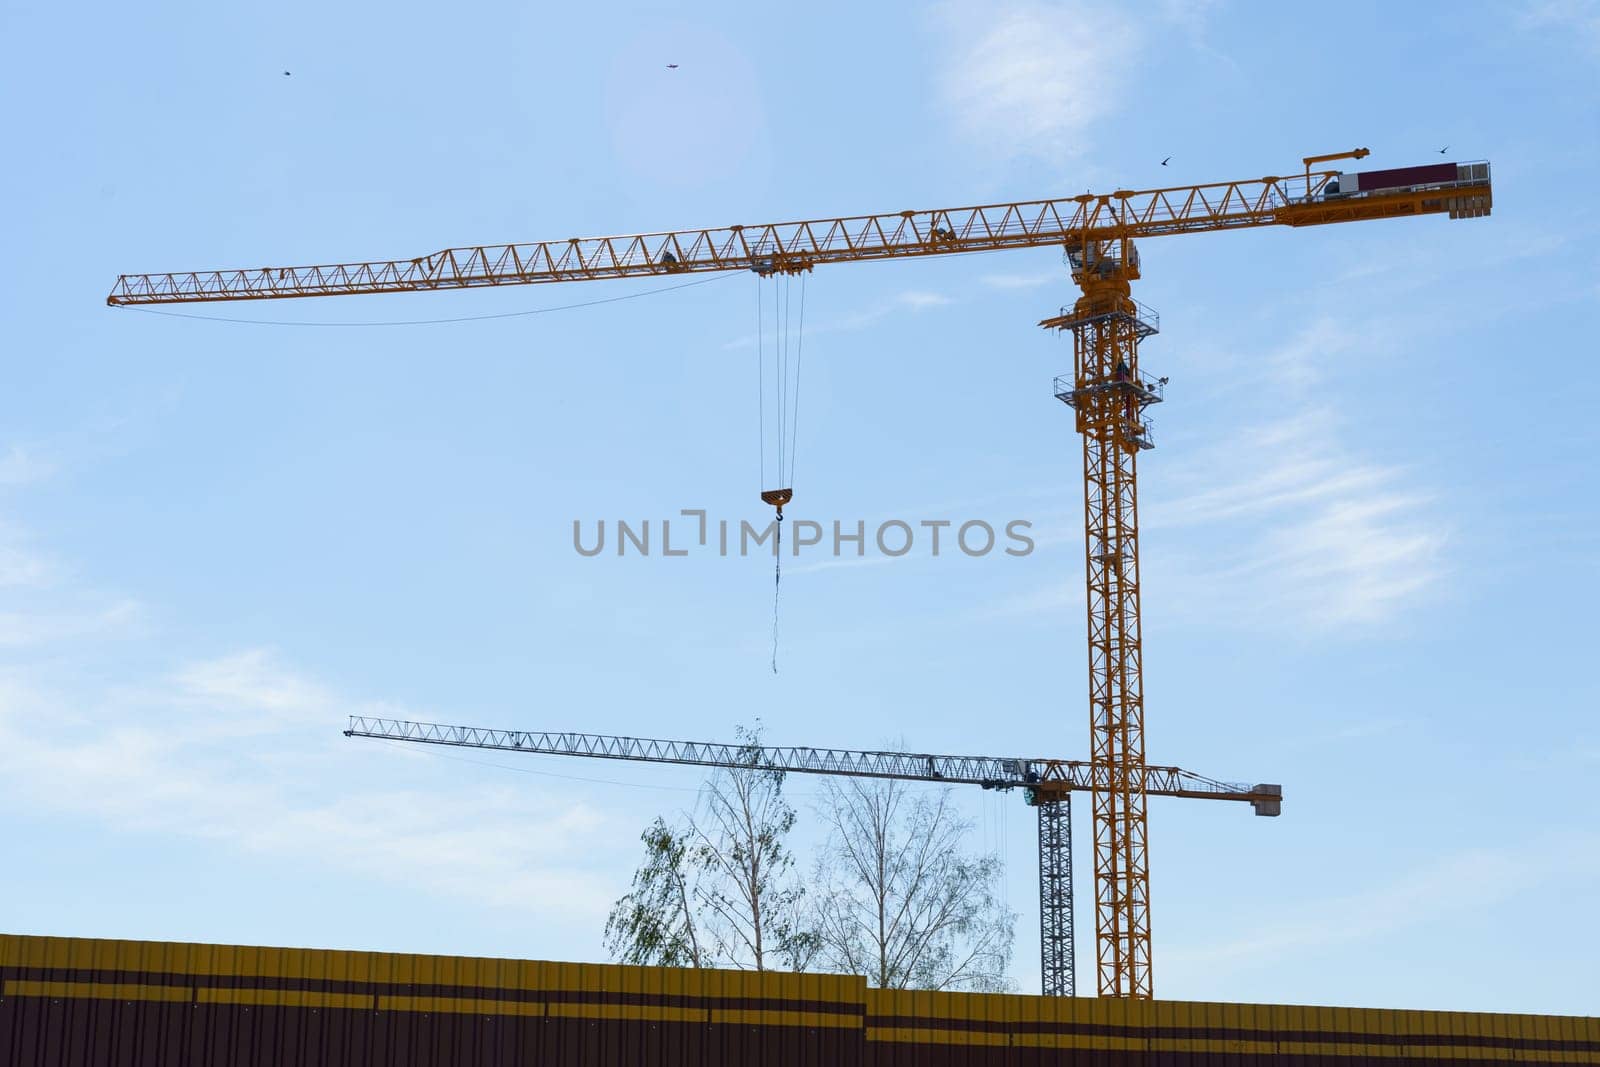 Construction cranes against the blue sky. Bottom view. Building concept.